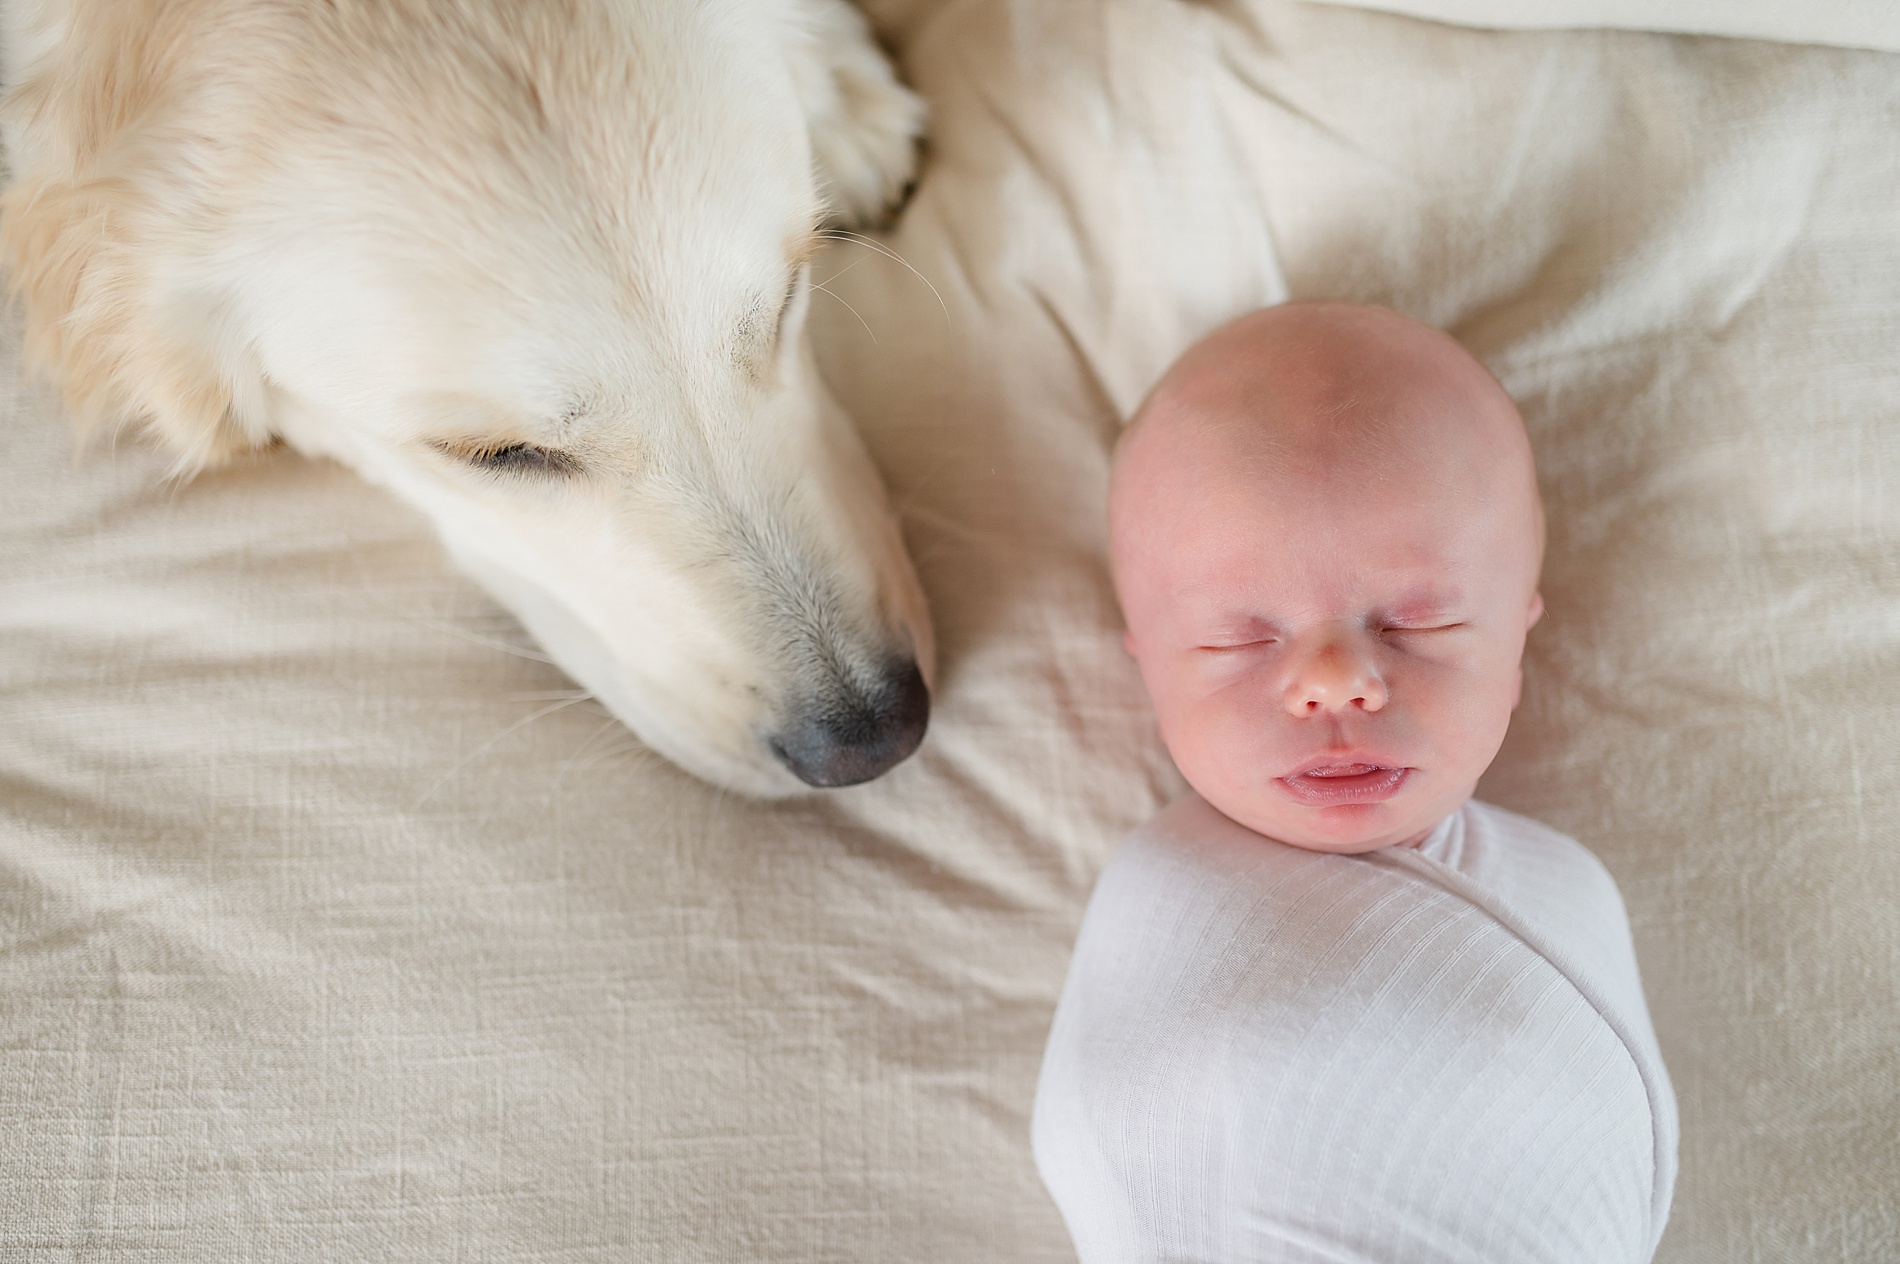 newborn sleeps near family dog photographed by Lindsey Dutton Photography, a Dallas Newborn photographer
